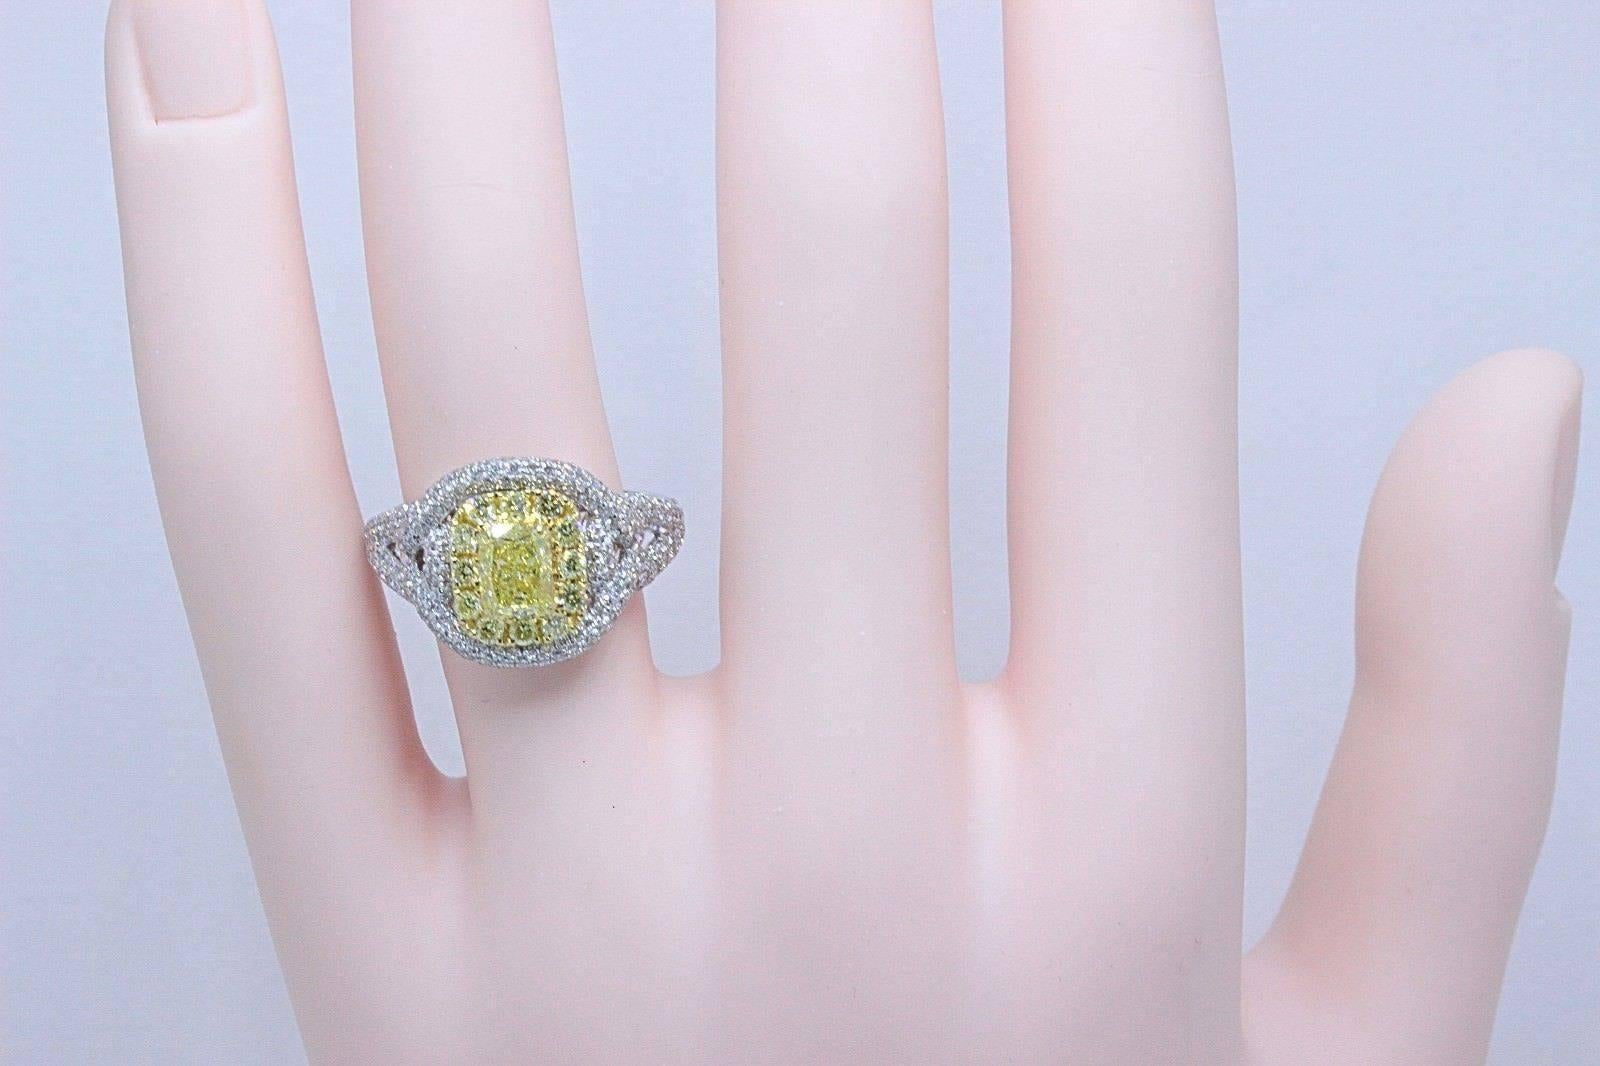 Fancy Intense Yellow 2.33 Carat Diamond Engagement Ring in Platinum with GIA 3